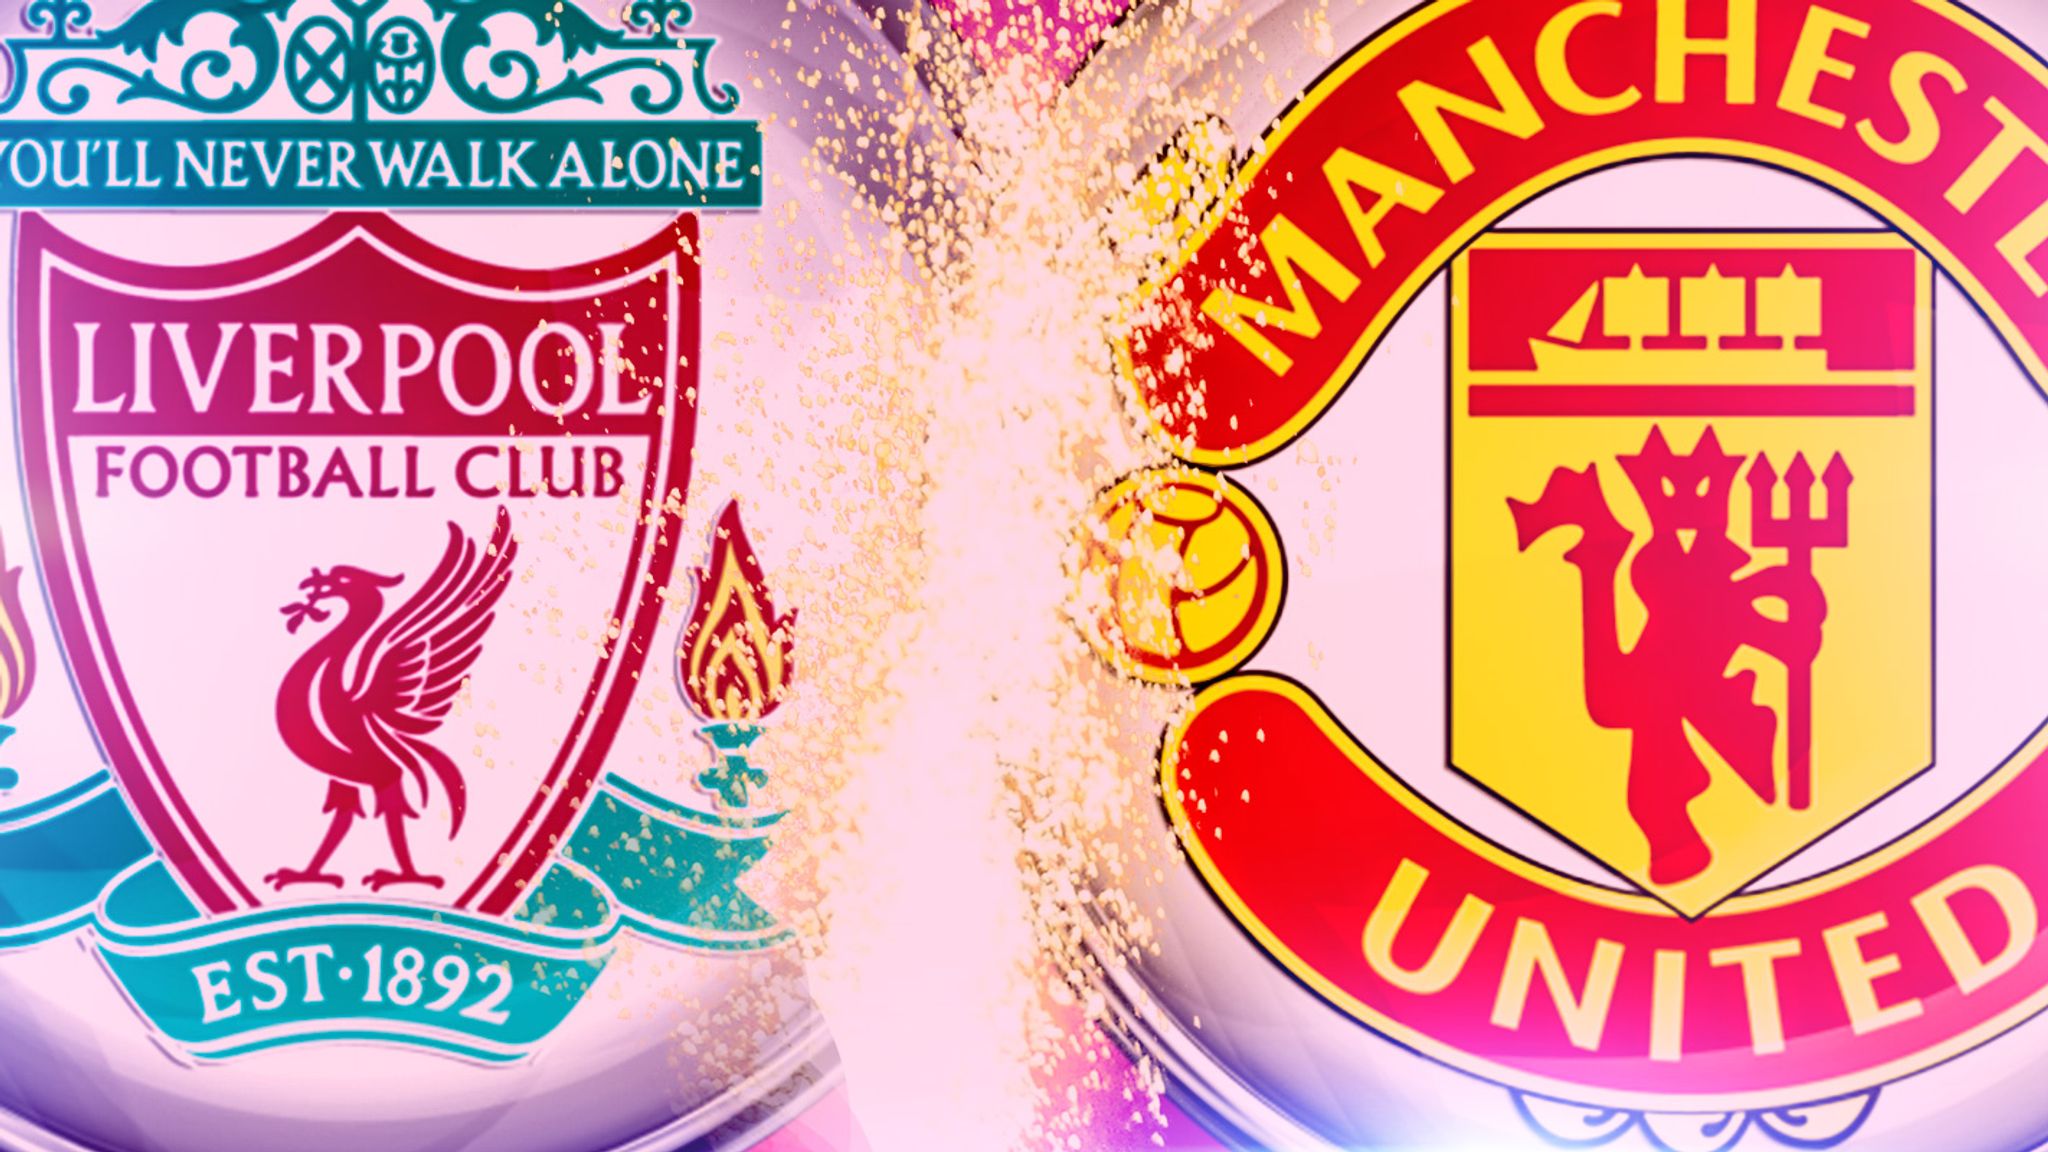 Liverpool v Manchester United preview: Dejan Lovren ruled out